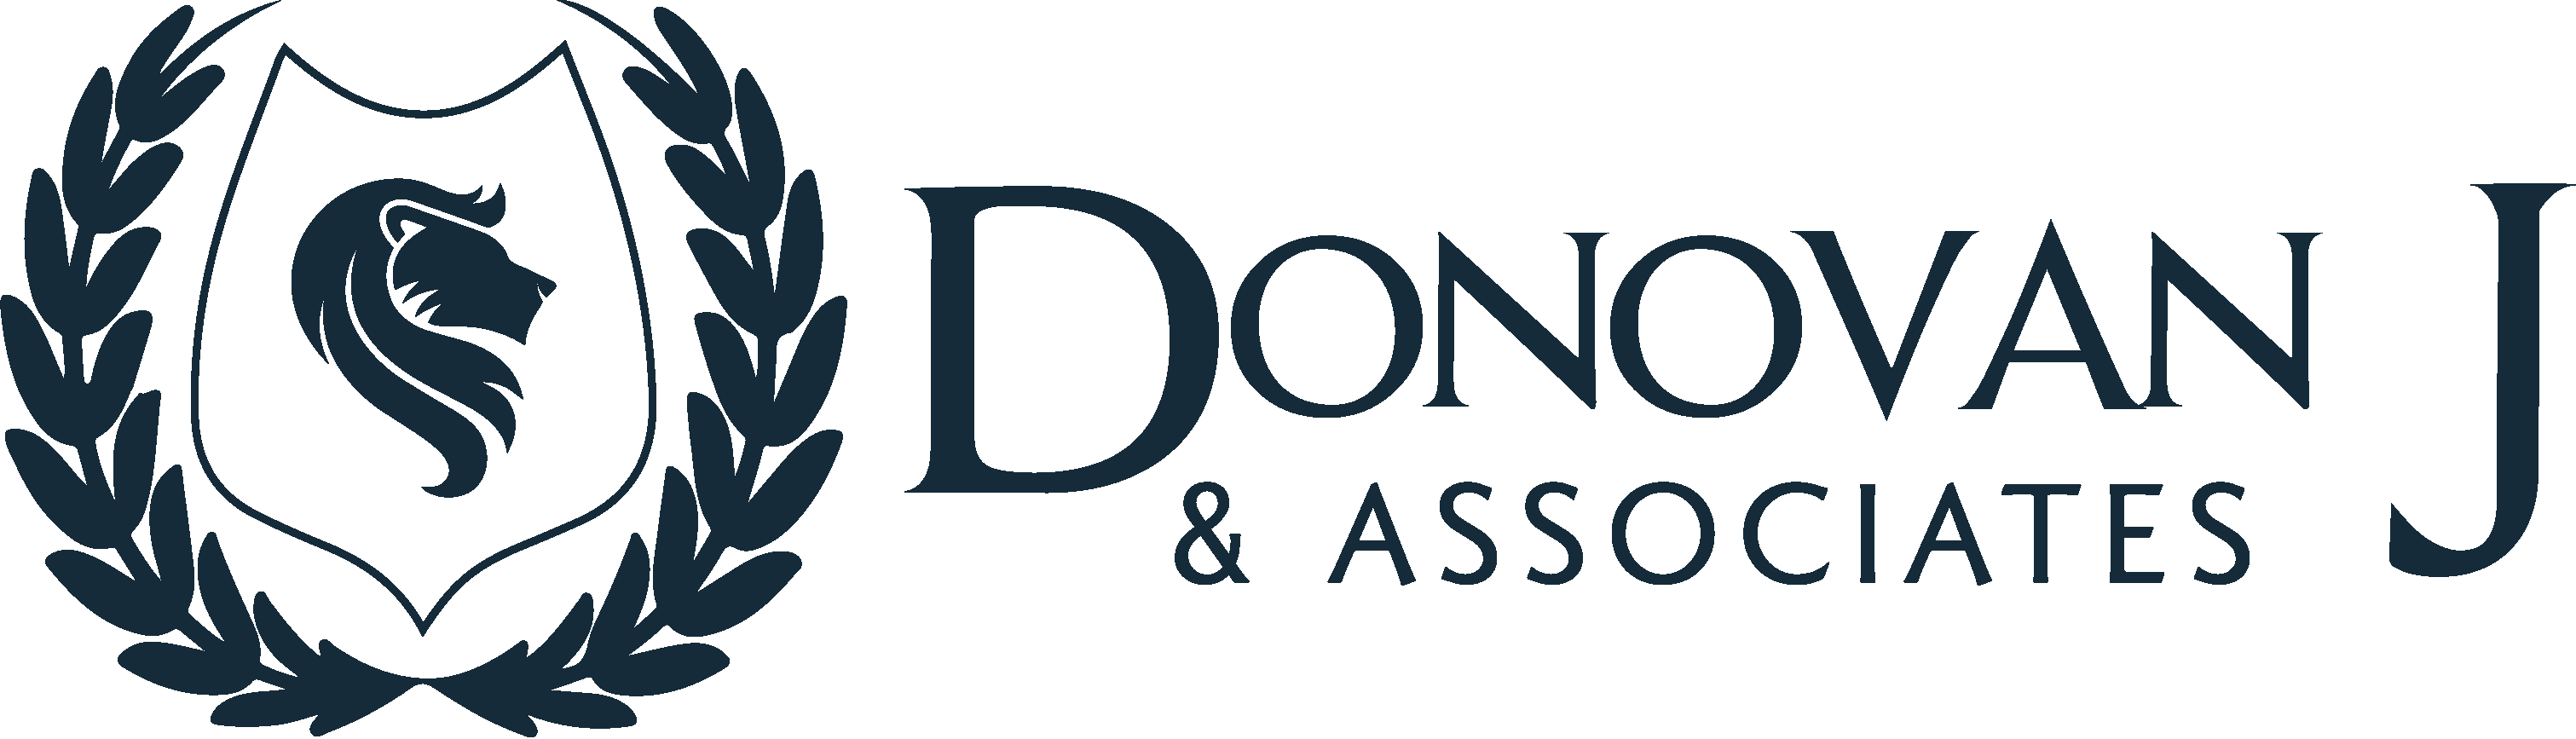 Donovan & Associates